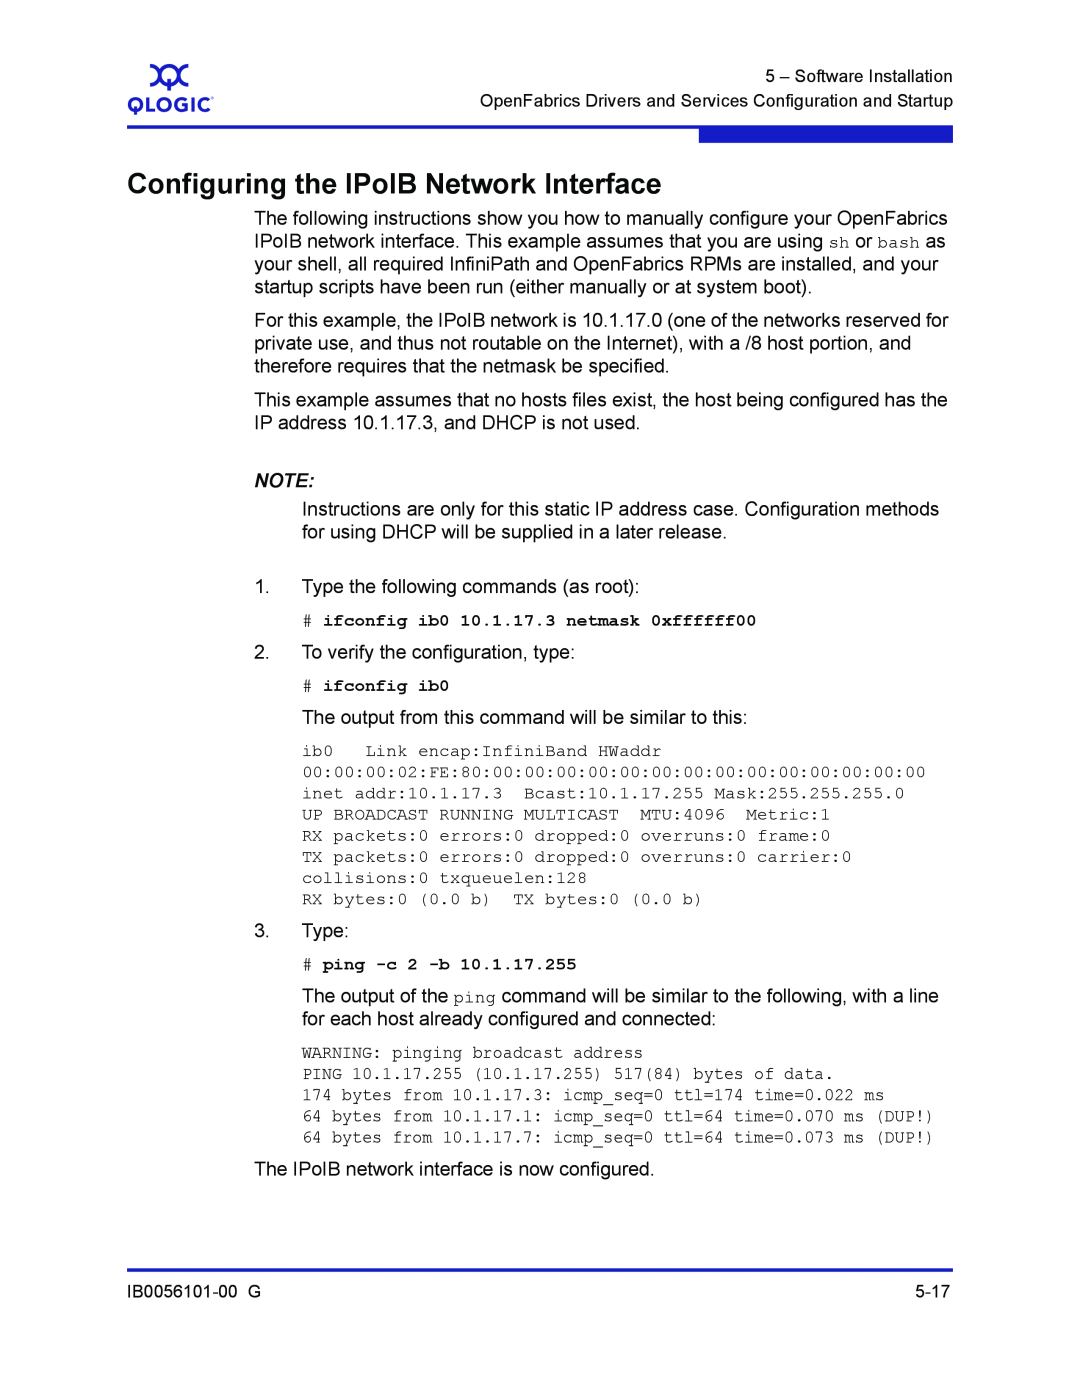 Q-Logic IB0056101-00 G manual Configuring the IPoIB Network Interface 